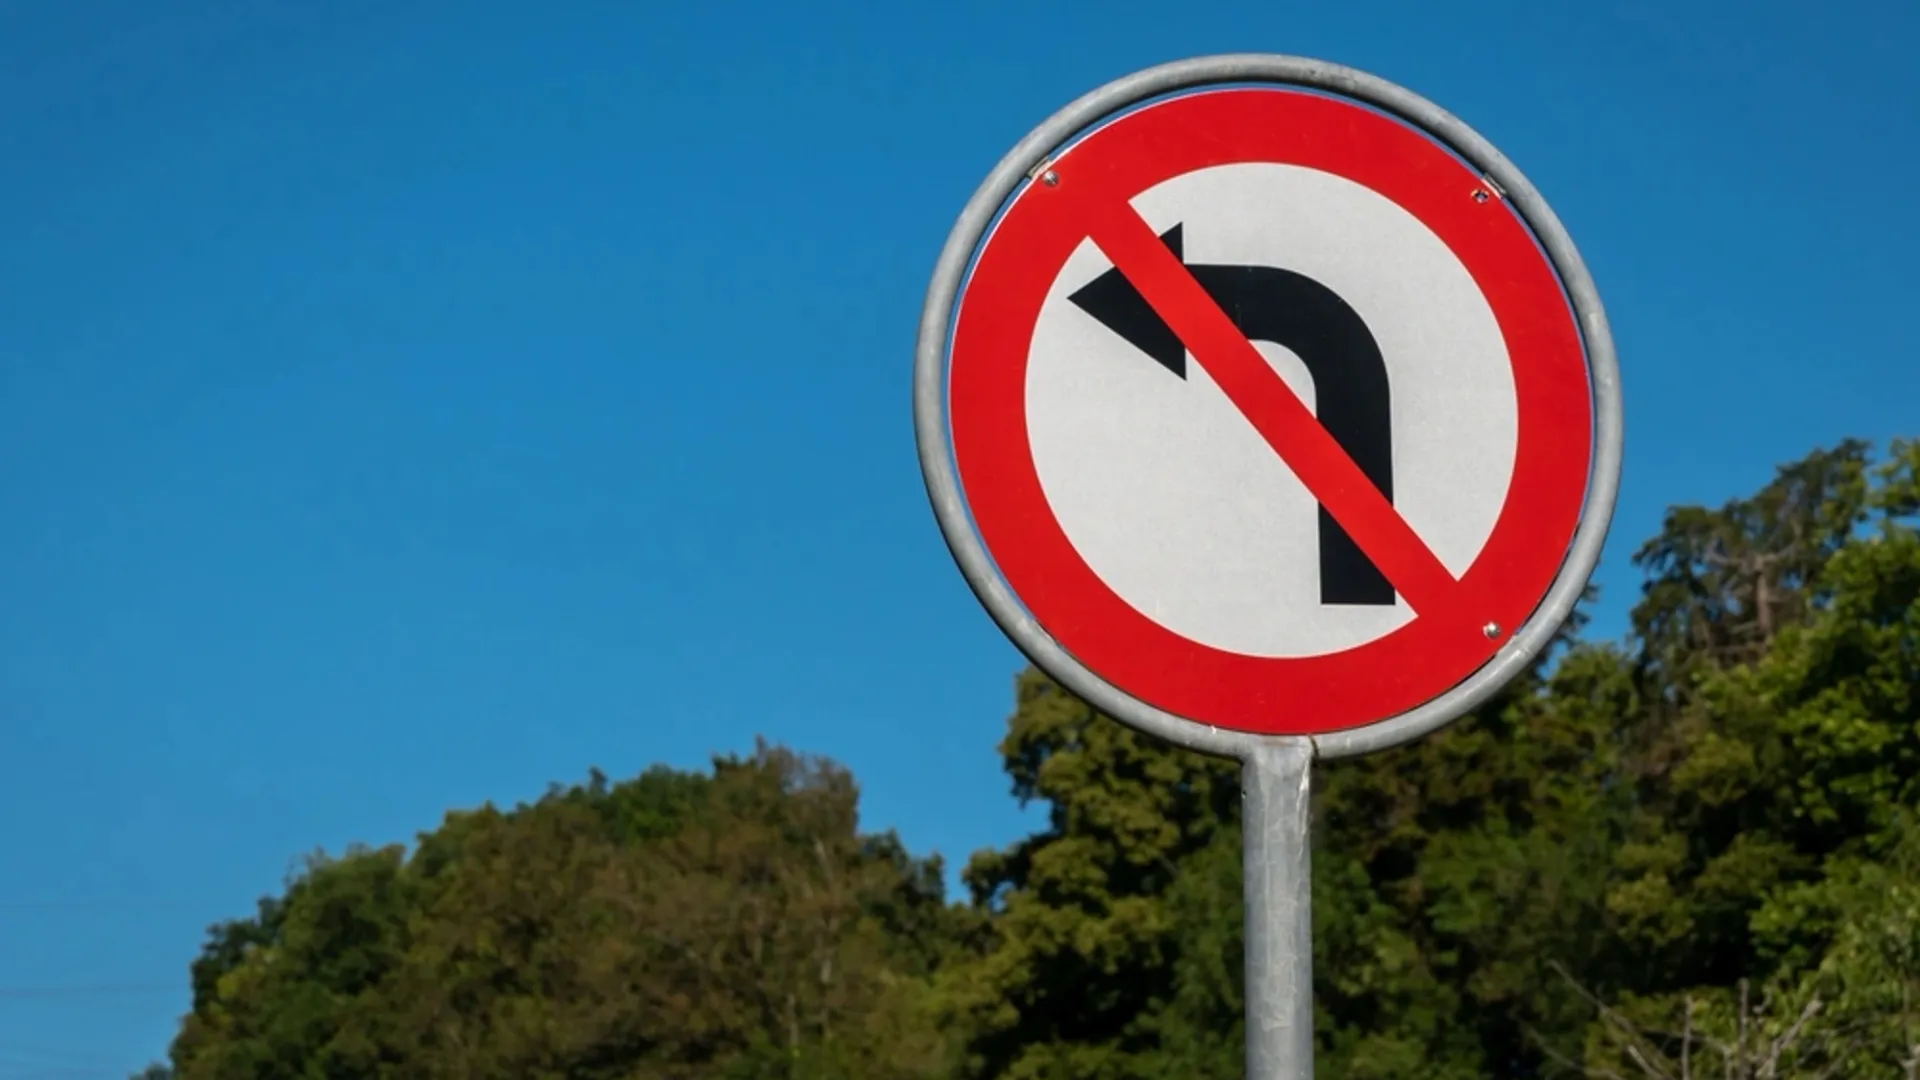 Запреты езды по европе. Дорожные знаки. Дорожные знаки в Италии. Дорожные знаки поворот налево запрещен. Дорожные знаки Великобритании.